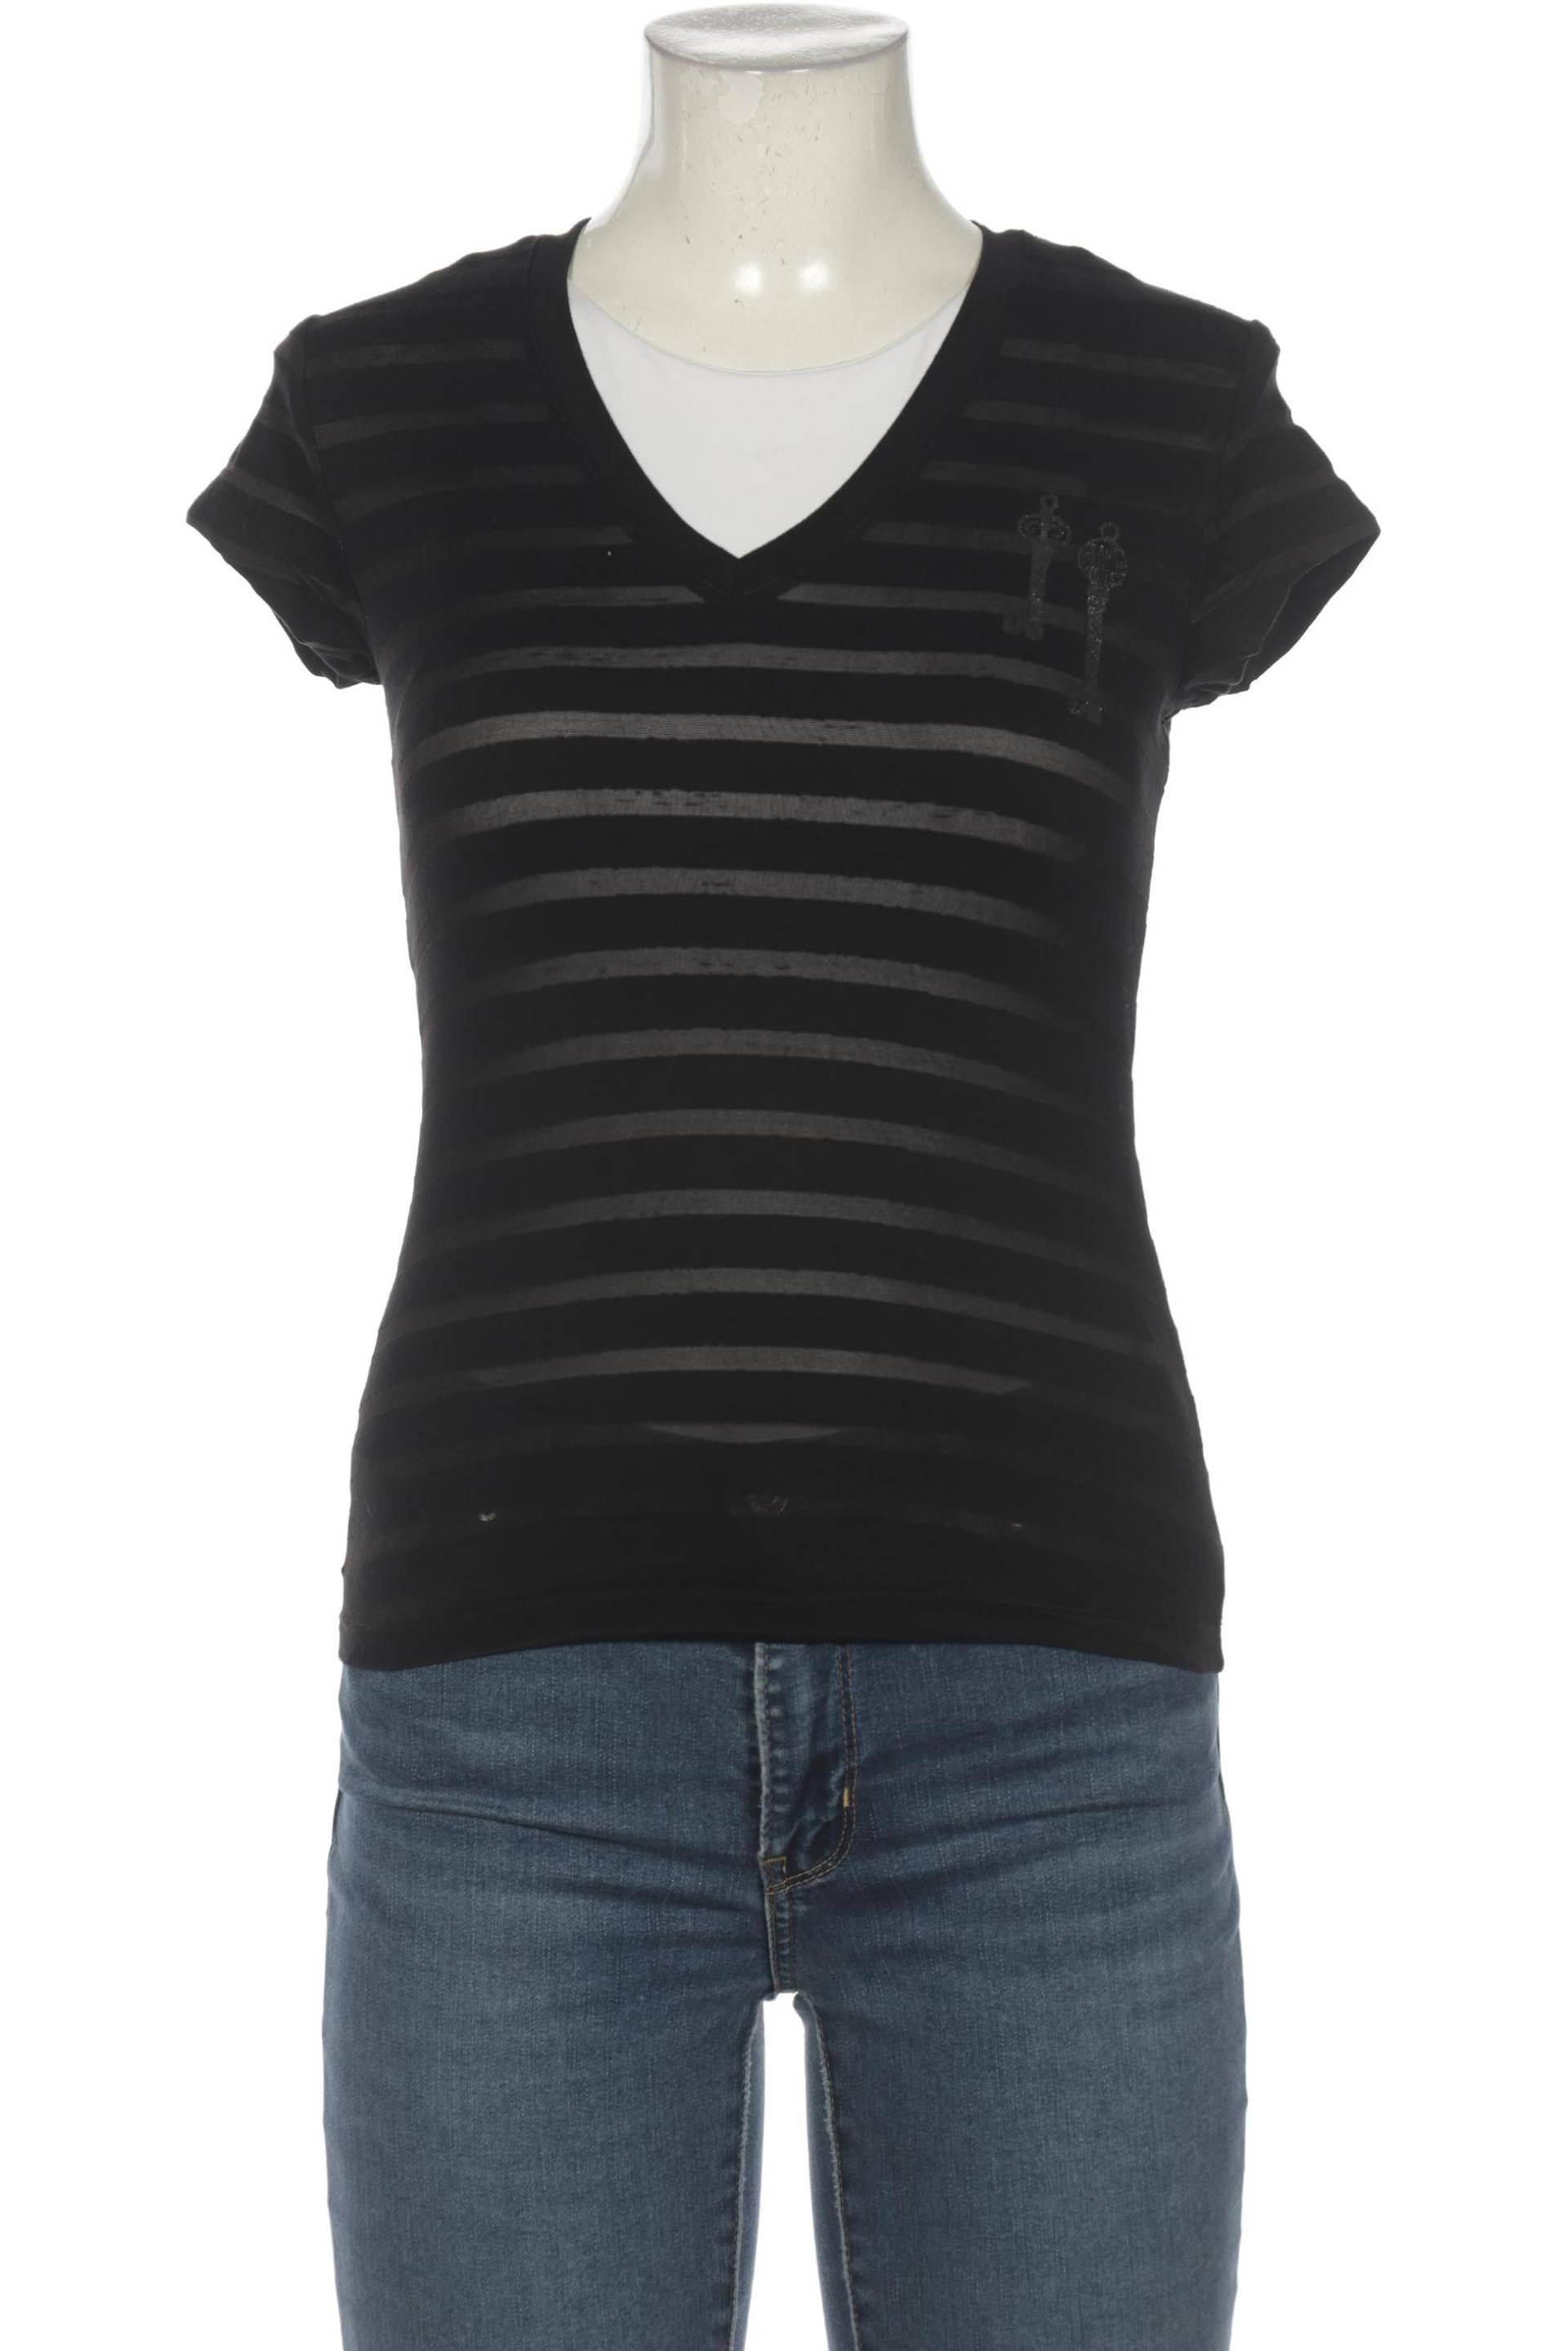 Jean Paul Gaultier Damen T-Shirt, schwarz von Jean Paul Gaultier